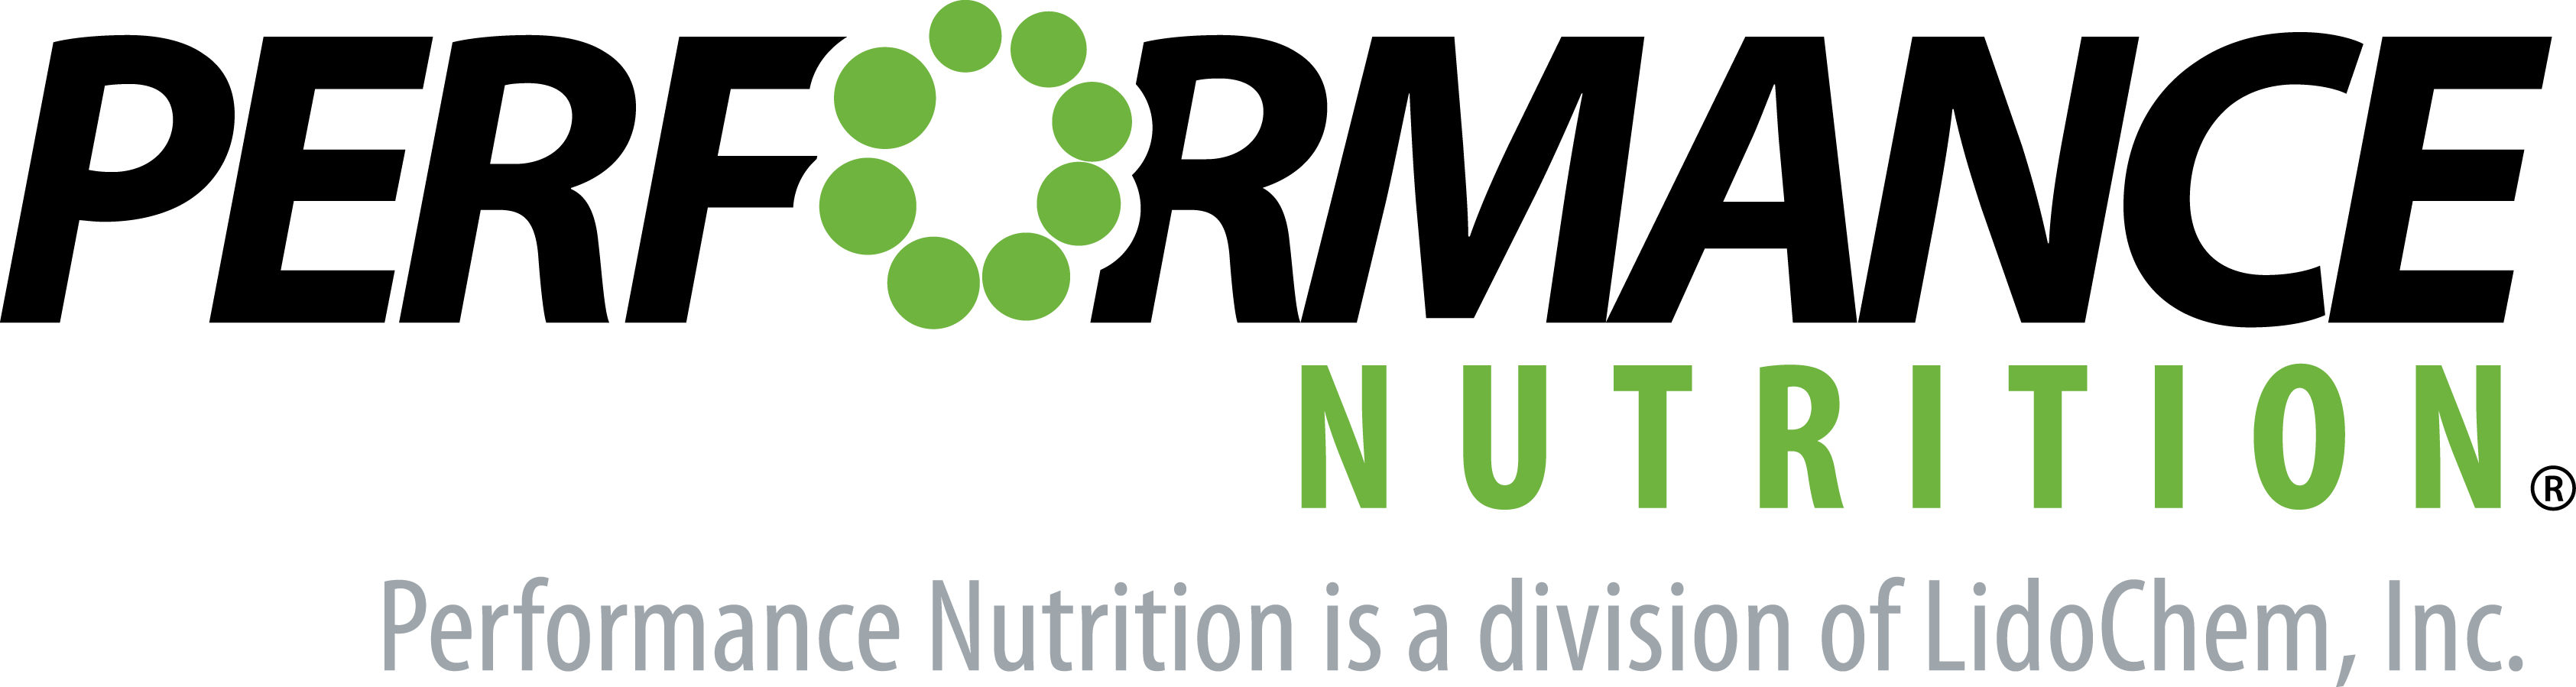 Performance Nutrition Fertilizers logo BlackPNGreen